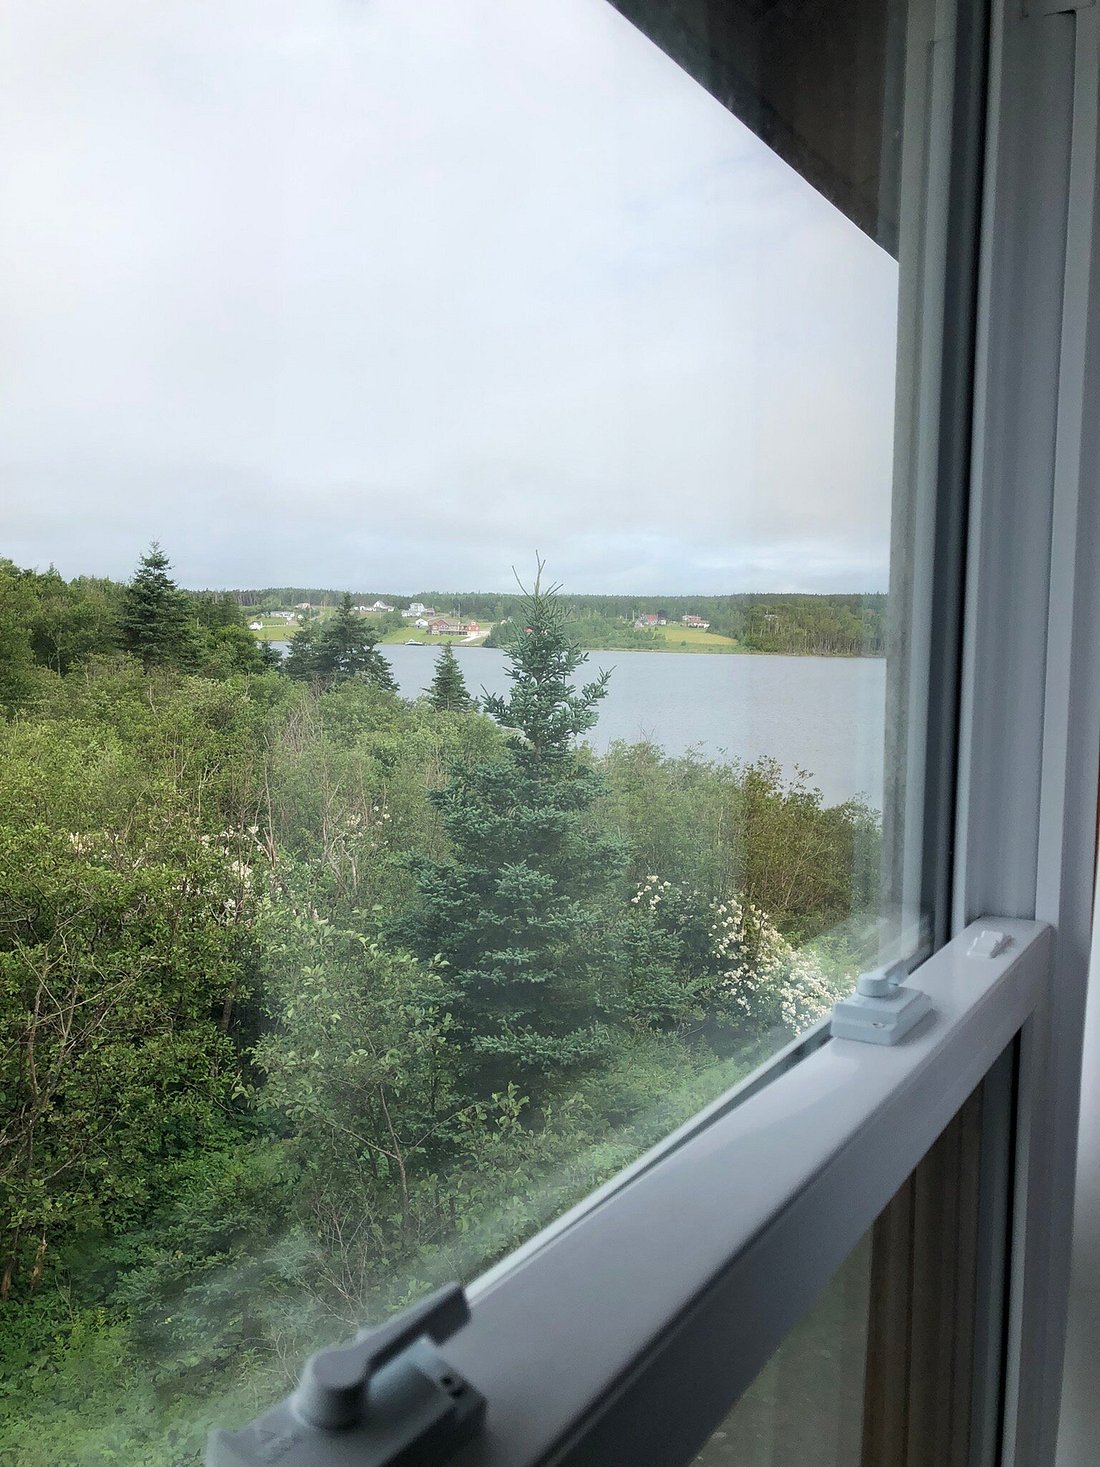 Bras d'Or Lakes Inn - UPDATED 2024 Prices, Reviews & Photos (Cape Breton  Island, Nova Scotia) - Tripadvisor